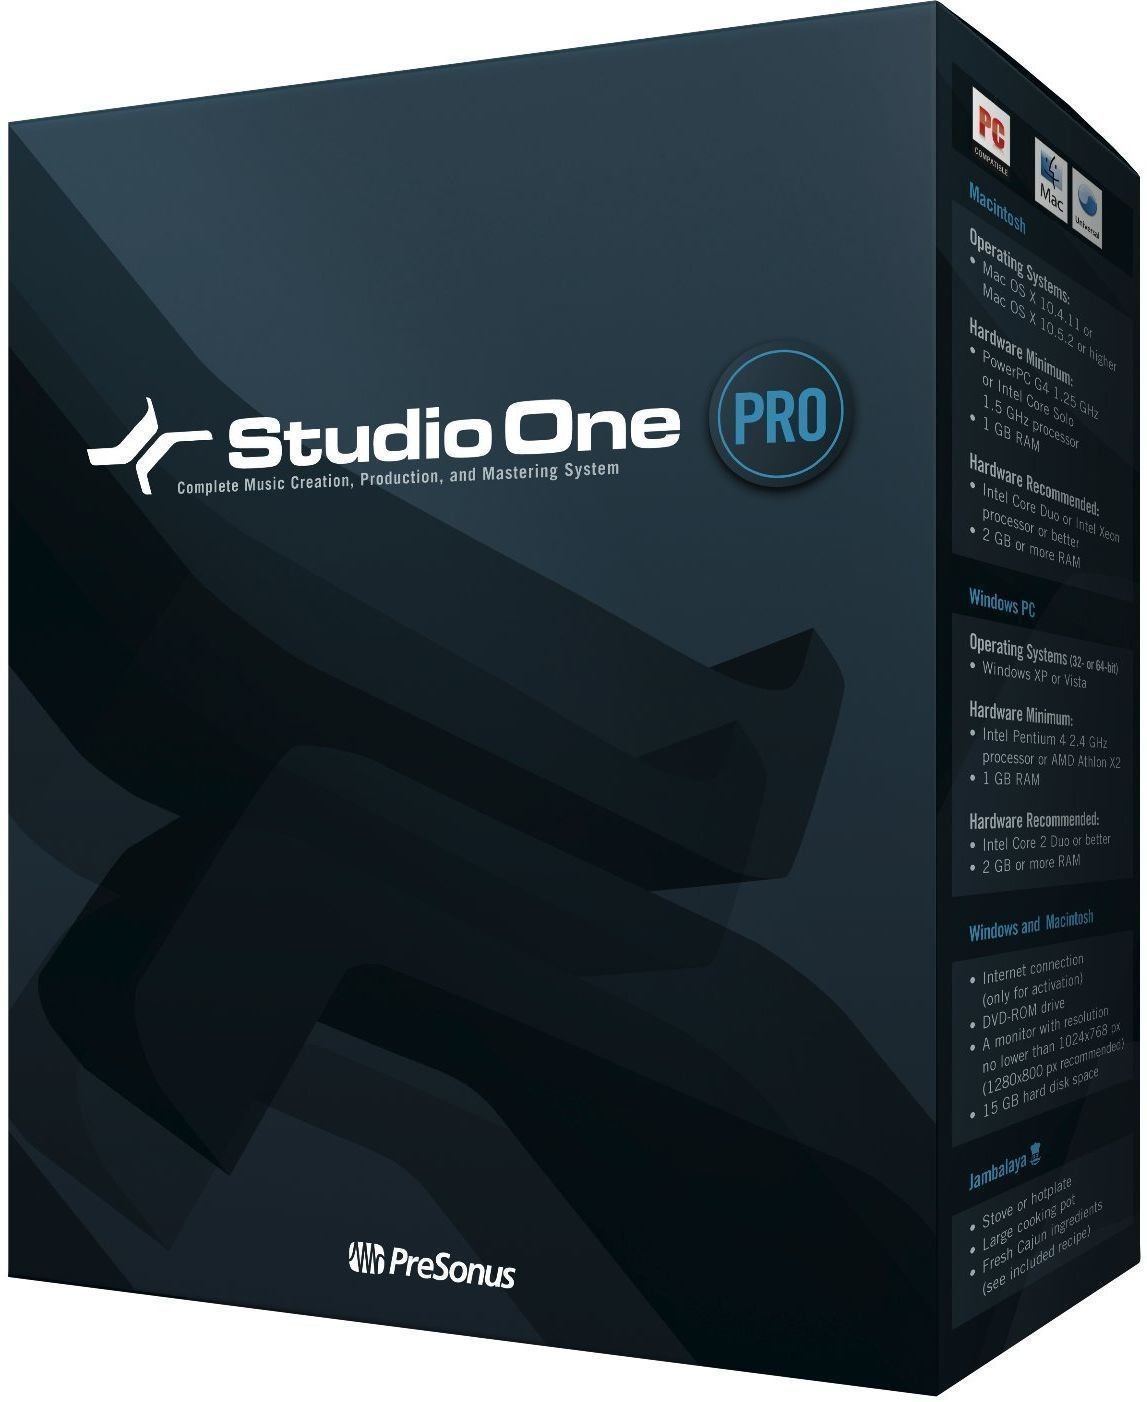 DAW Recording Software Presonus Studio One Pro Audio